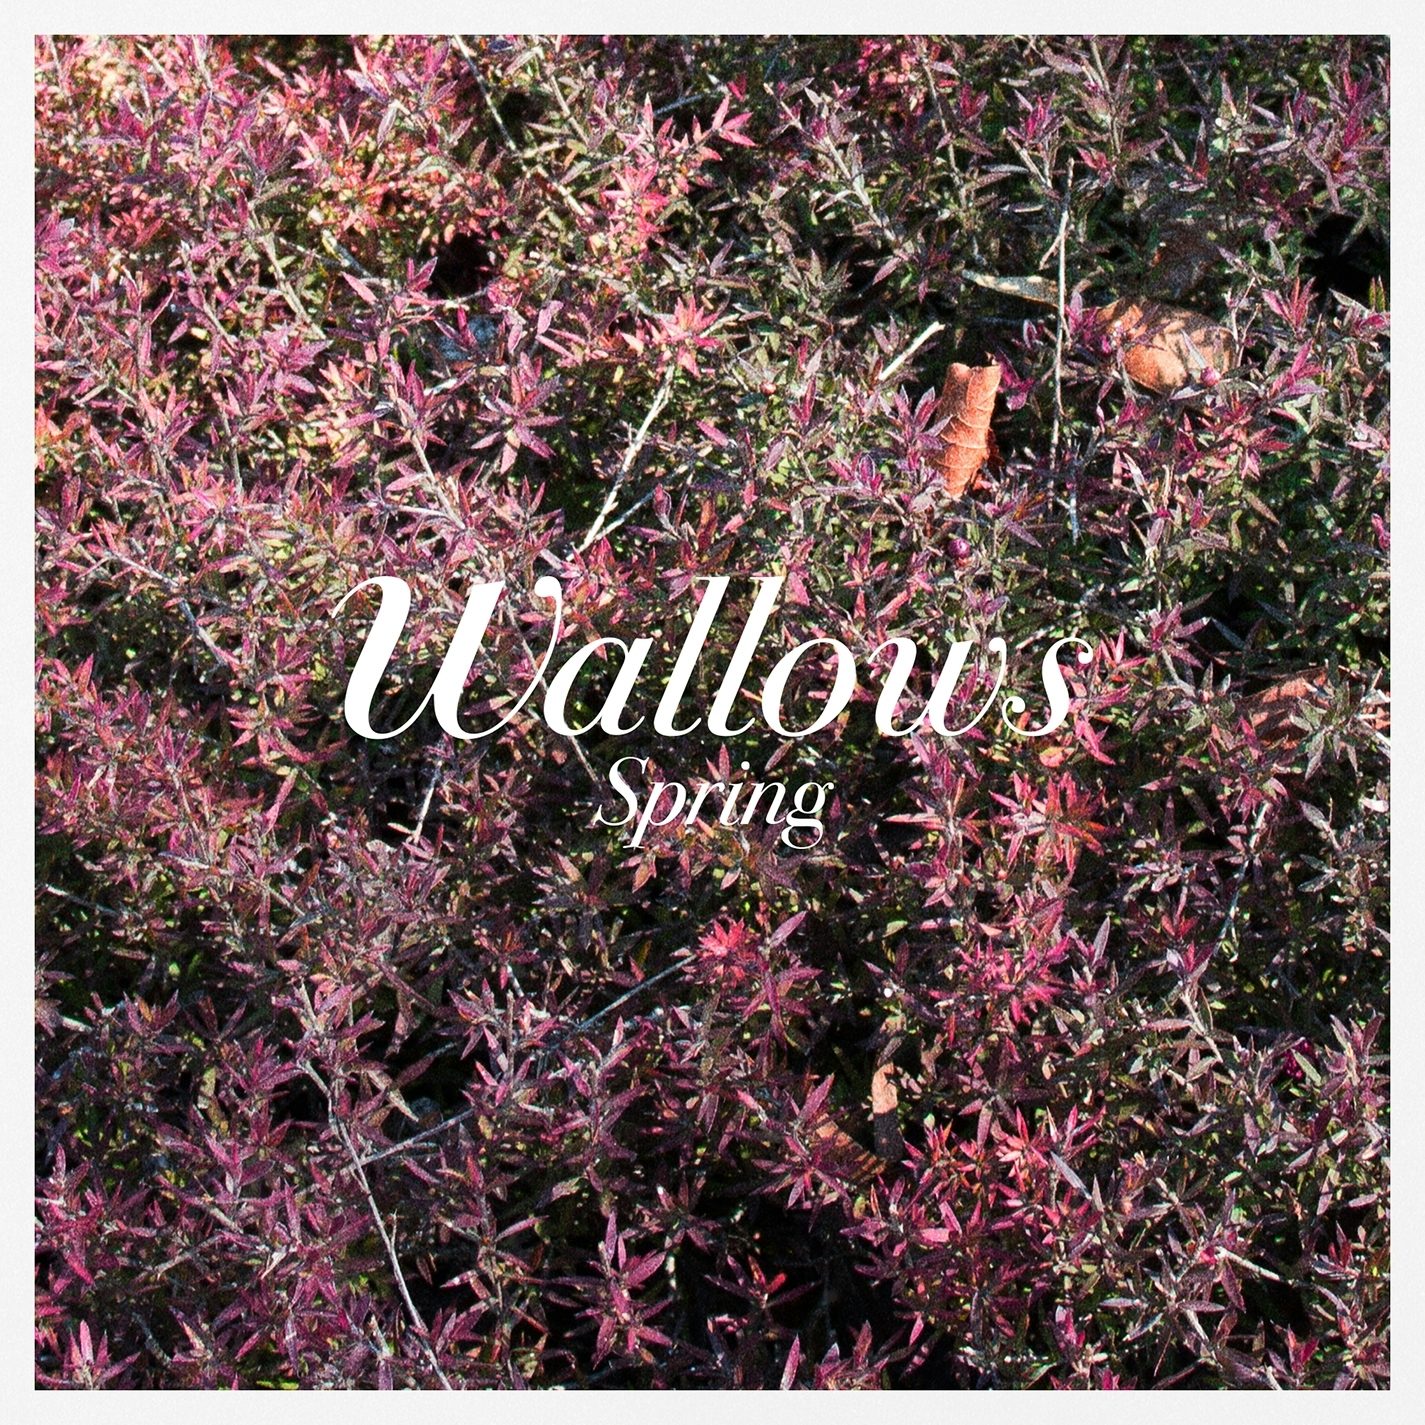 These days песня. Wallows обложка. Wallows Spring. Обложка Ep альбома. Wallows album Cover.